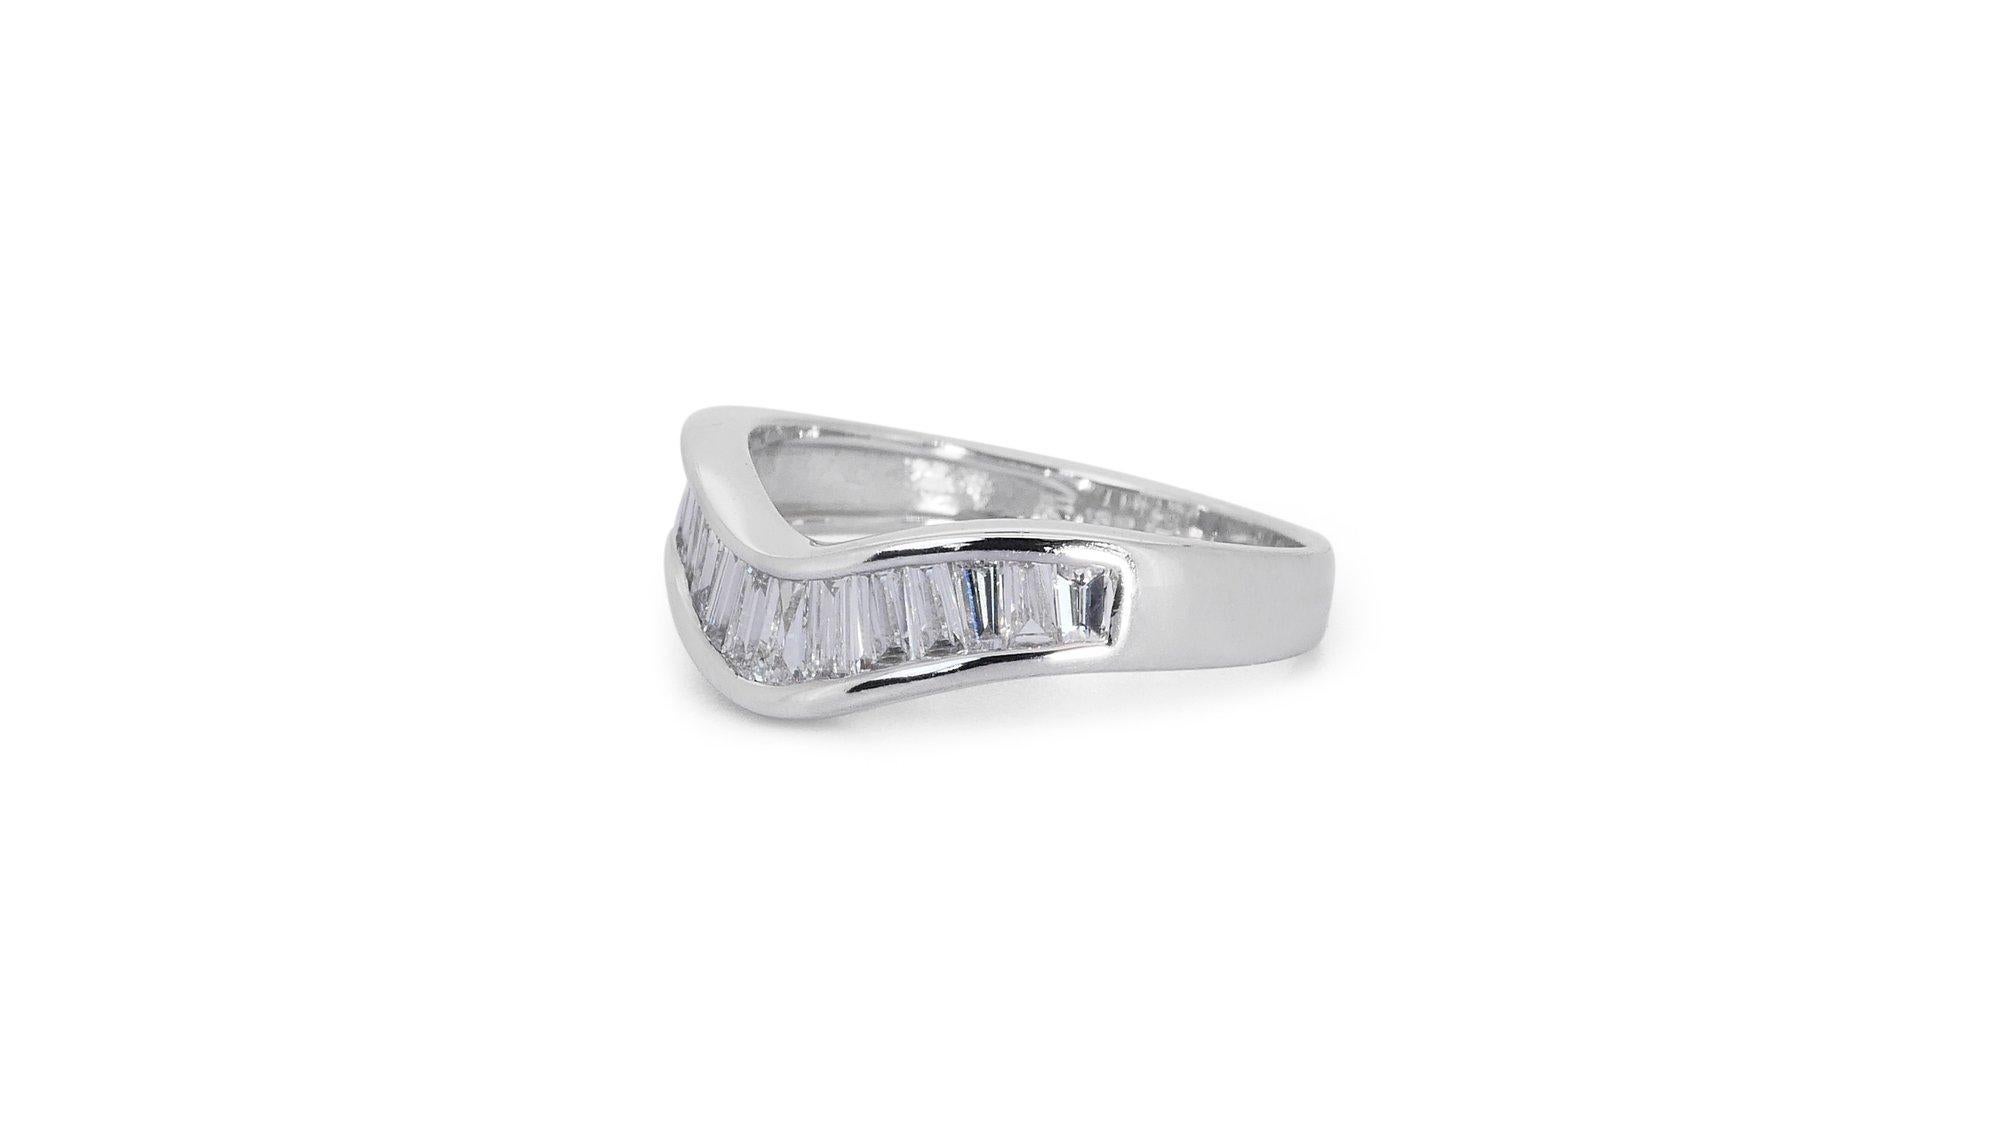 Ravishing 18k White Gold Pave Stack Ring w/ 1.2 ct Natural Diamonds IGI Cert For Sale 3